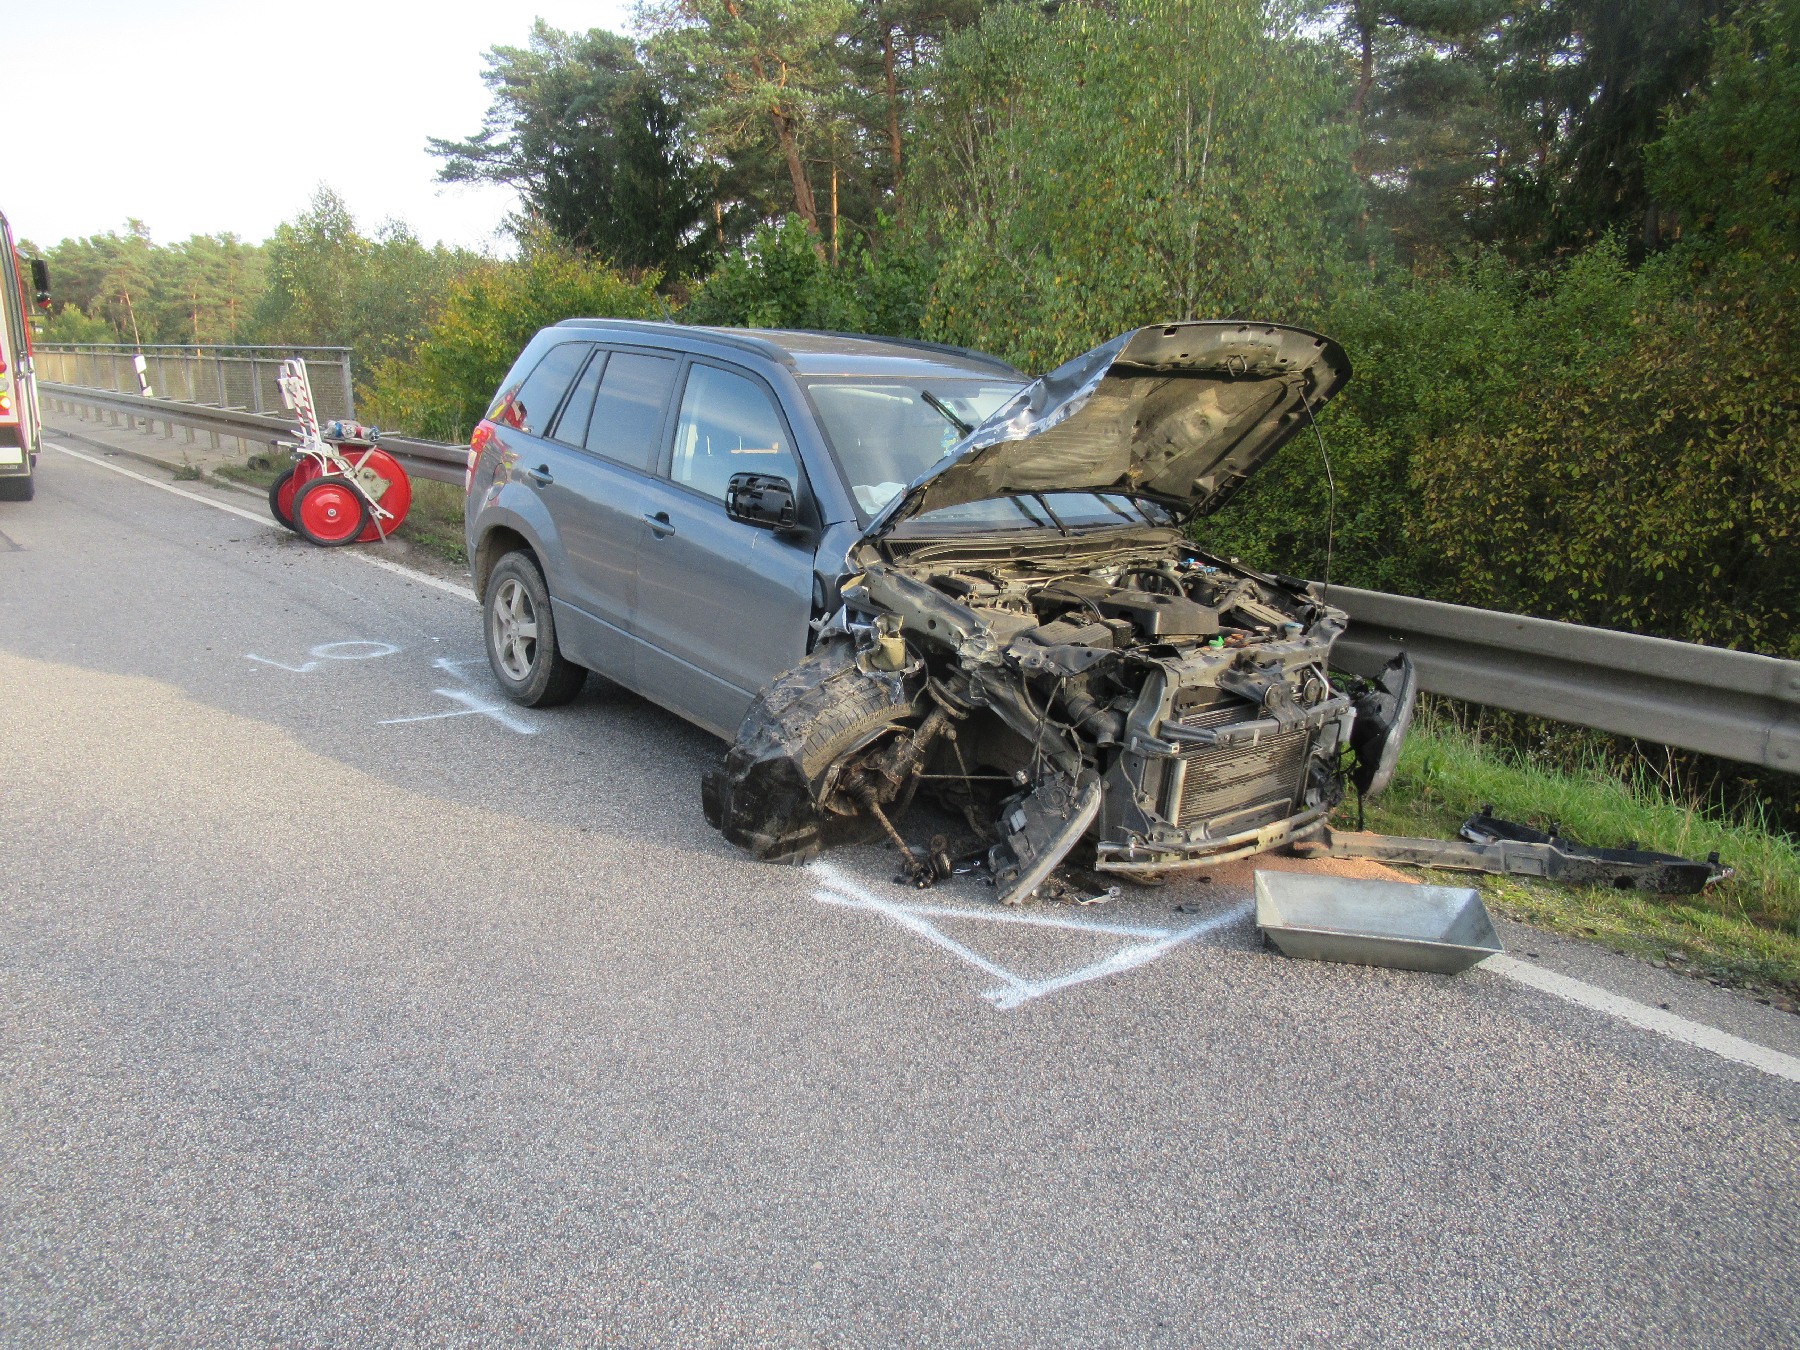 Verkehrsunfall mit Personenschaden bei Ebermannsdorf